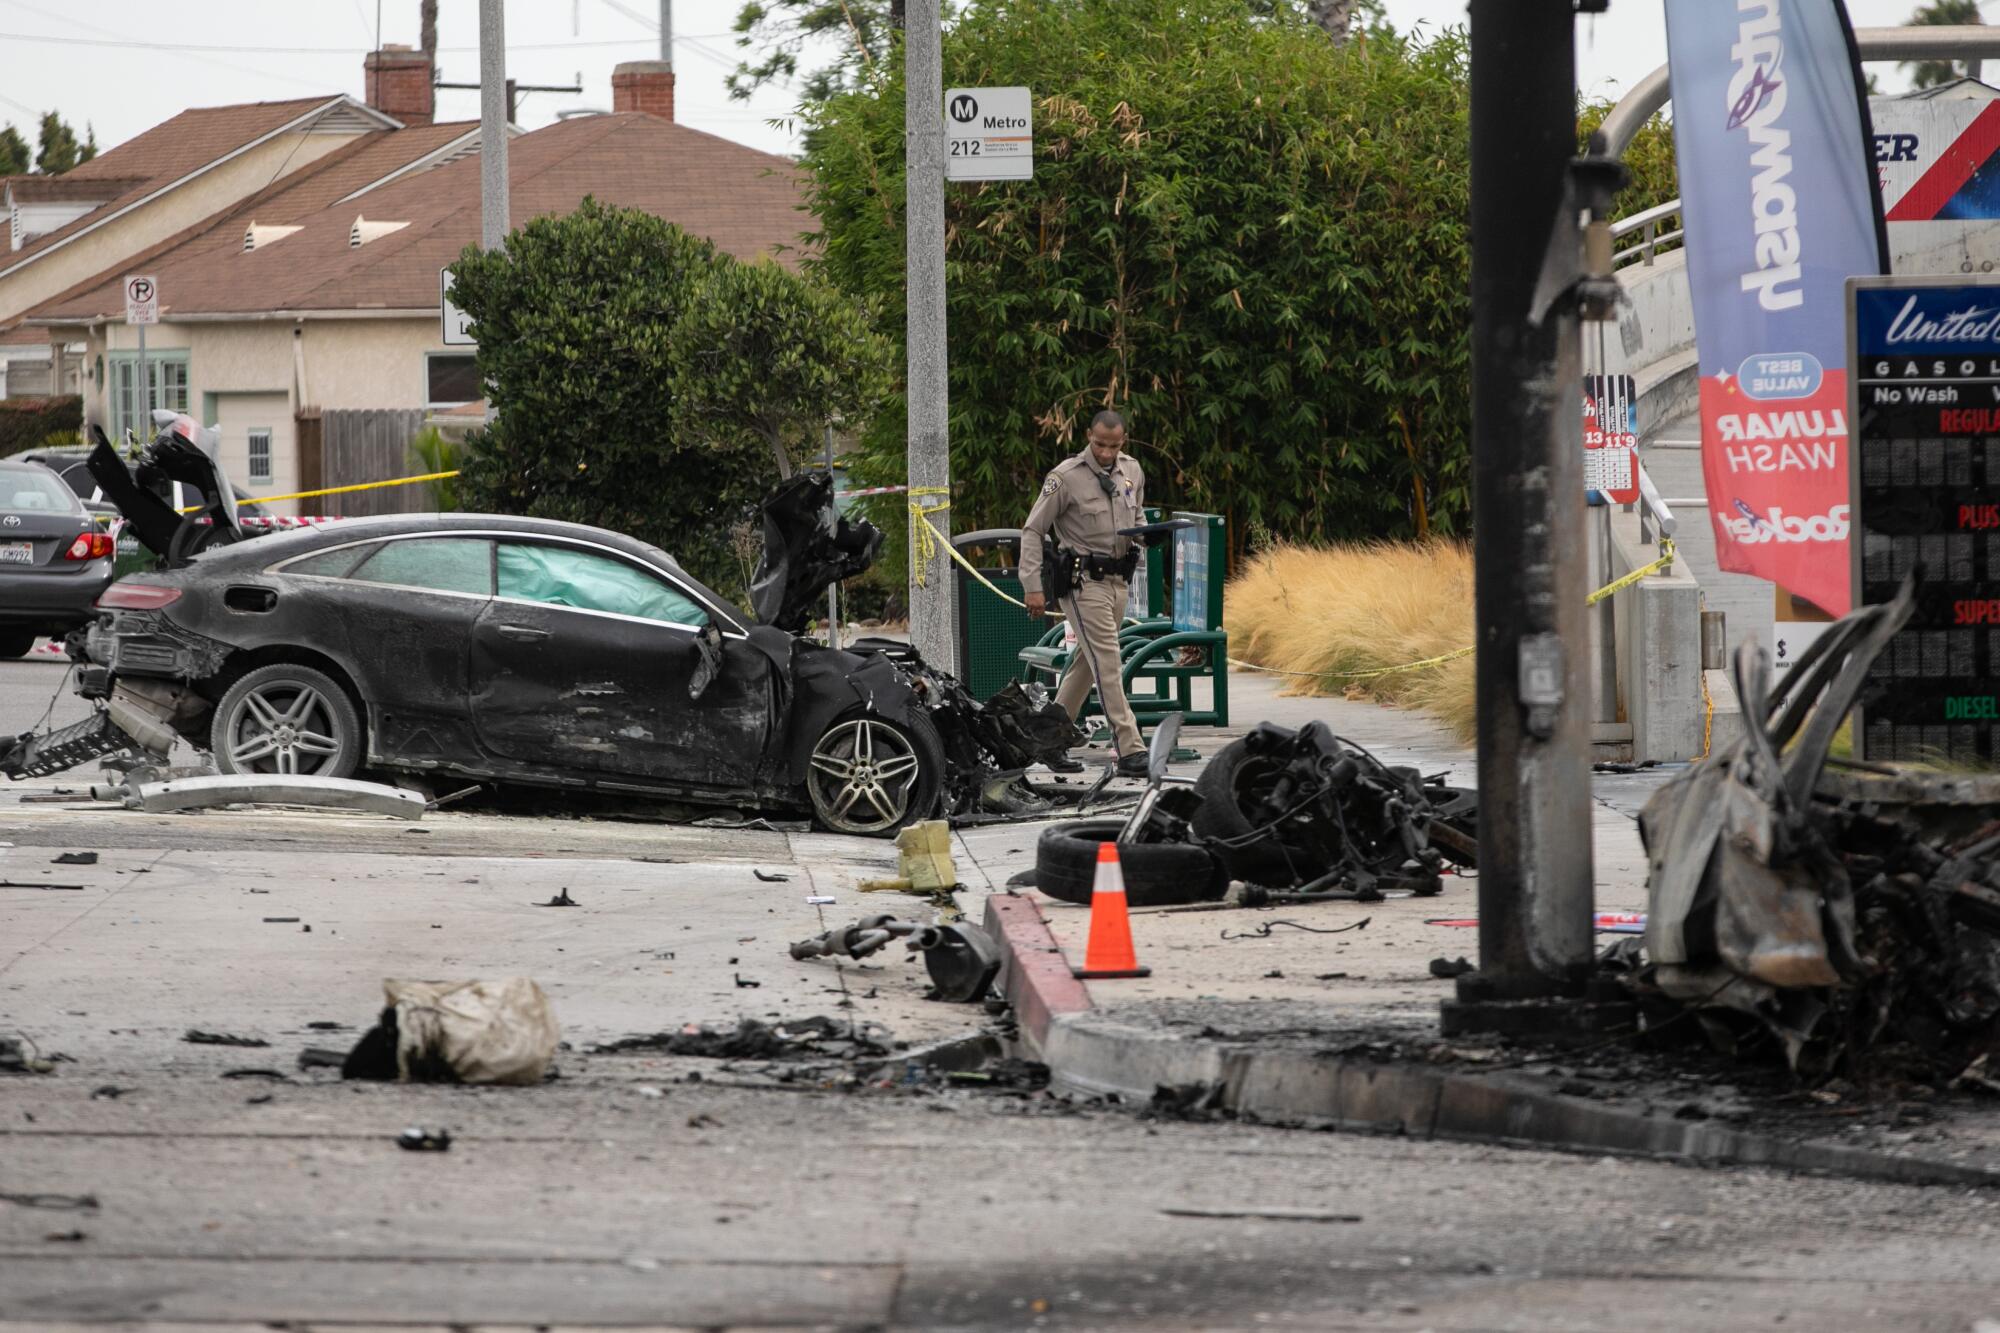 A black car crashed into a light pole 